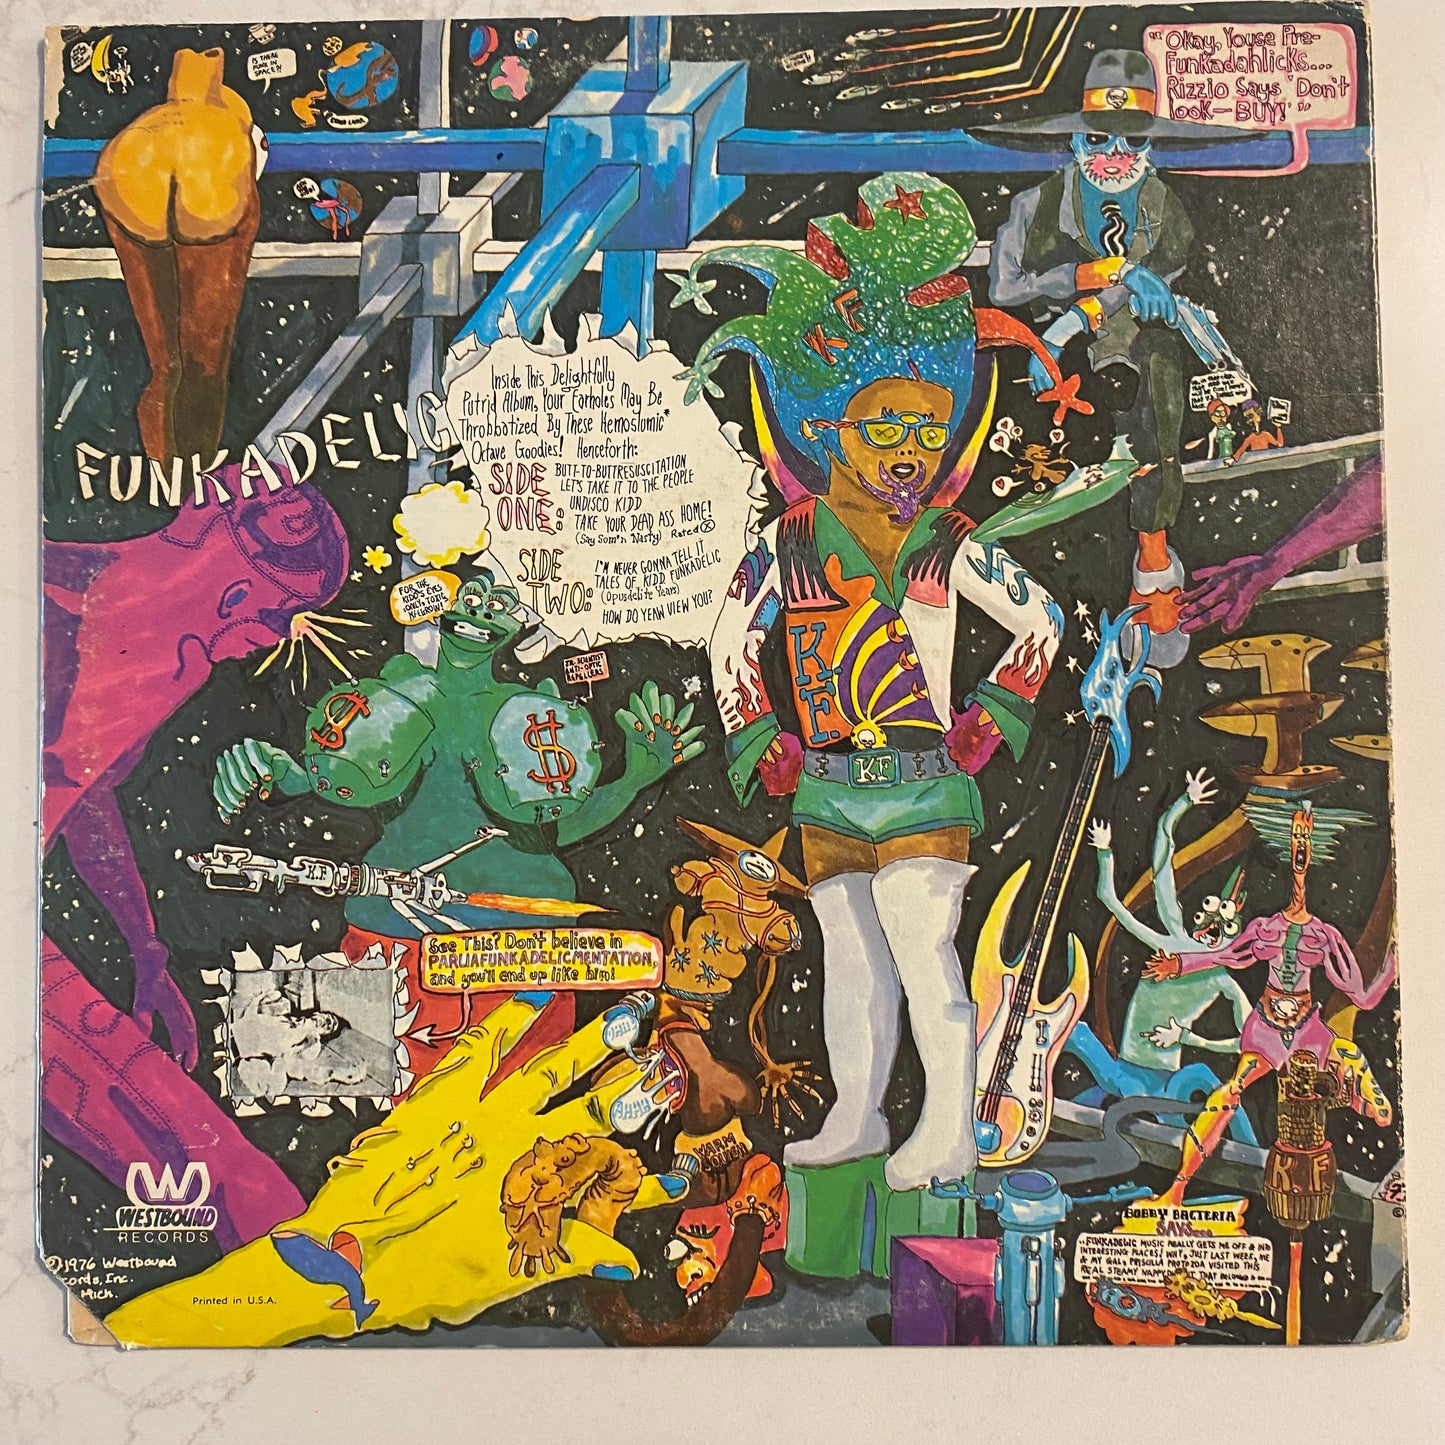 Funkadelic - Tales Of Kidd Funkadelic (LP, Album, San) (L)